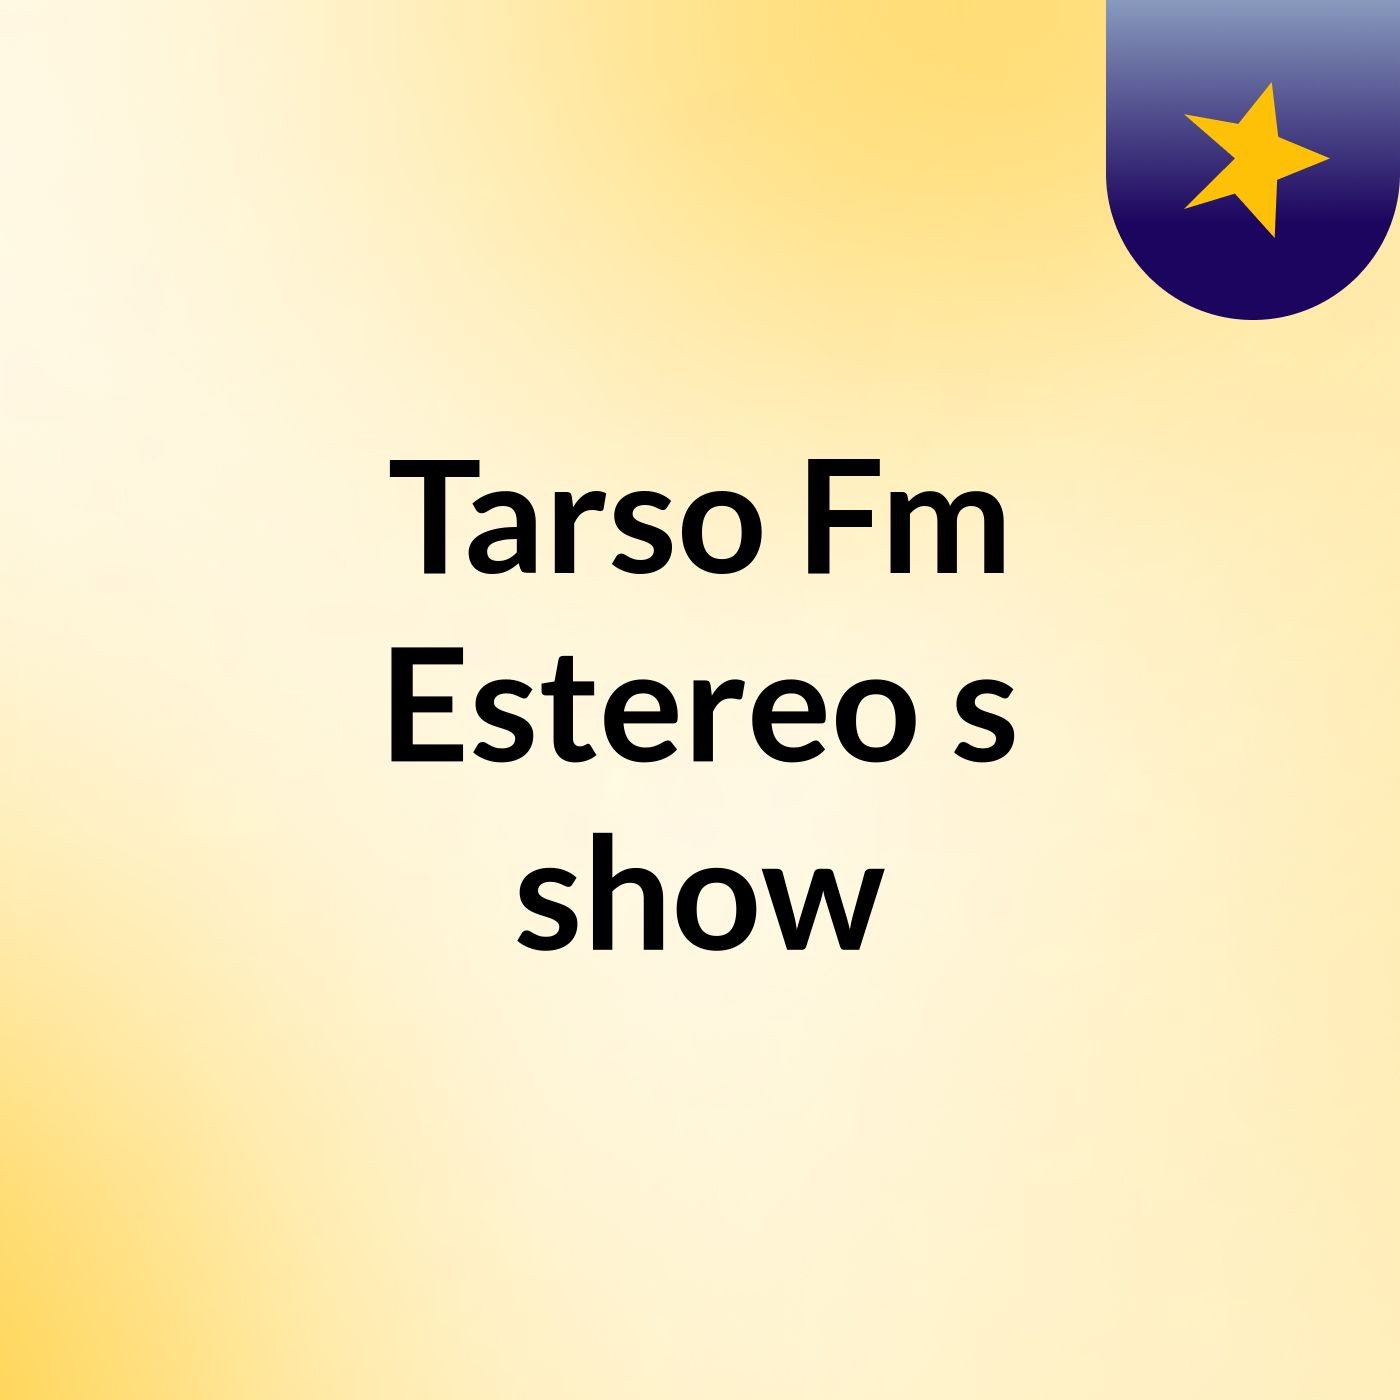 Tarso Fm Estereo's show